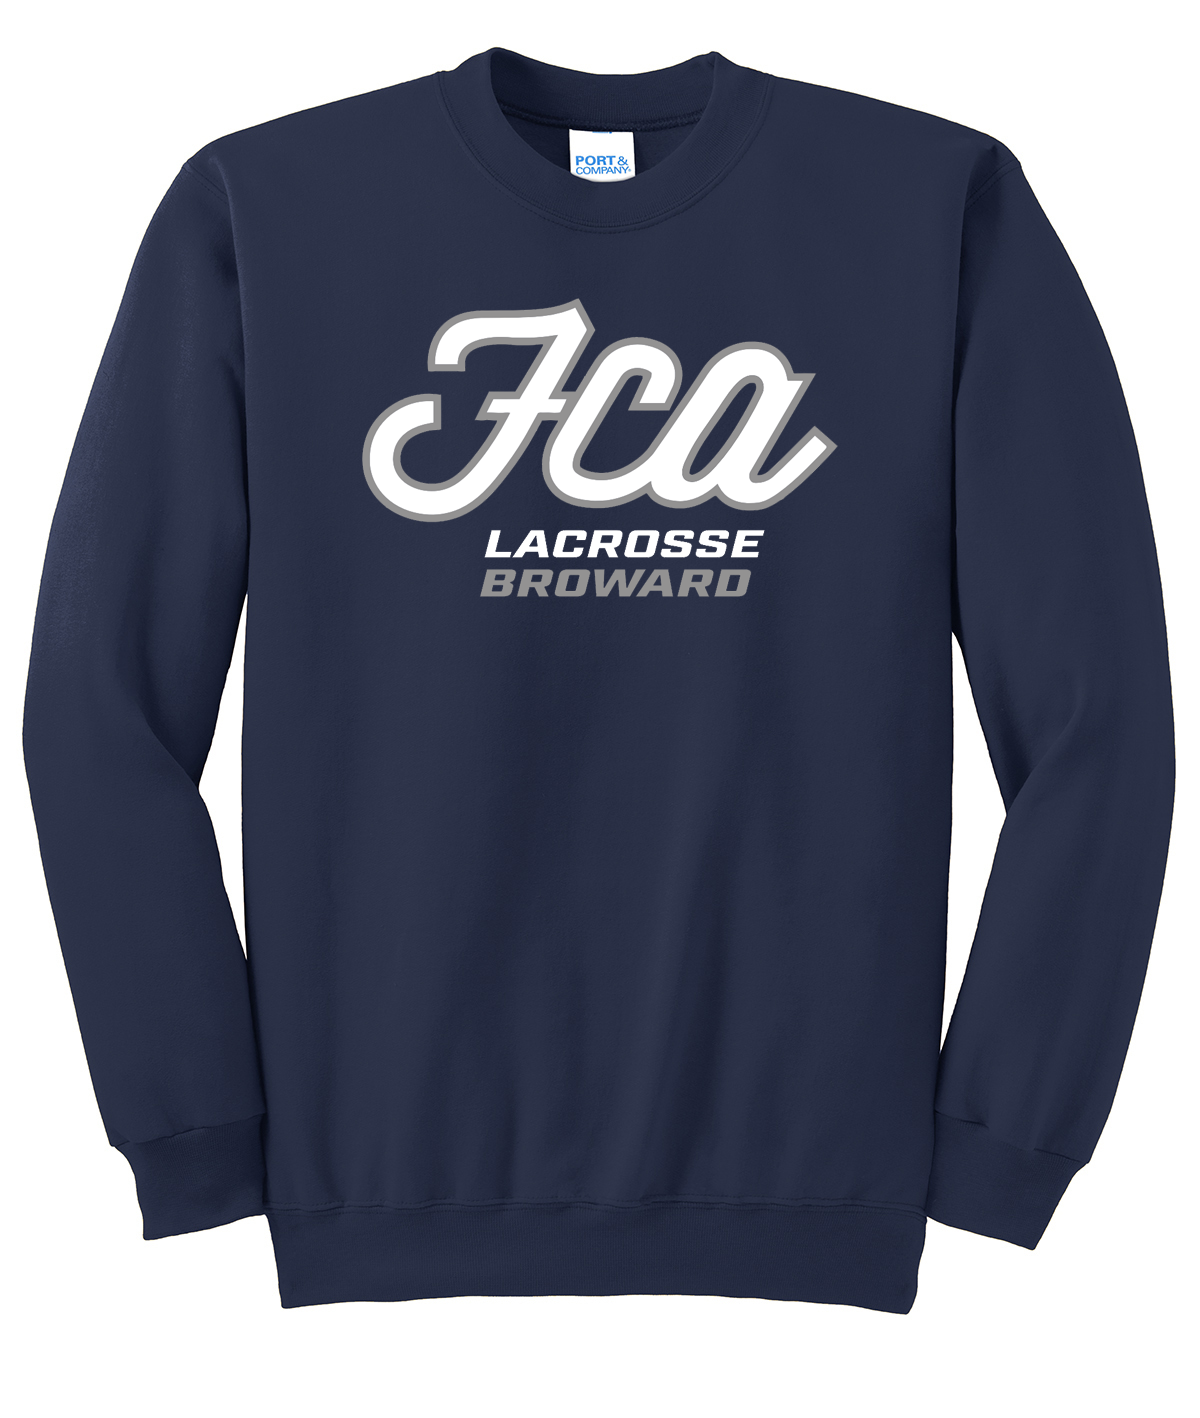 FCA Lacrosse Crew Neck Sweater